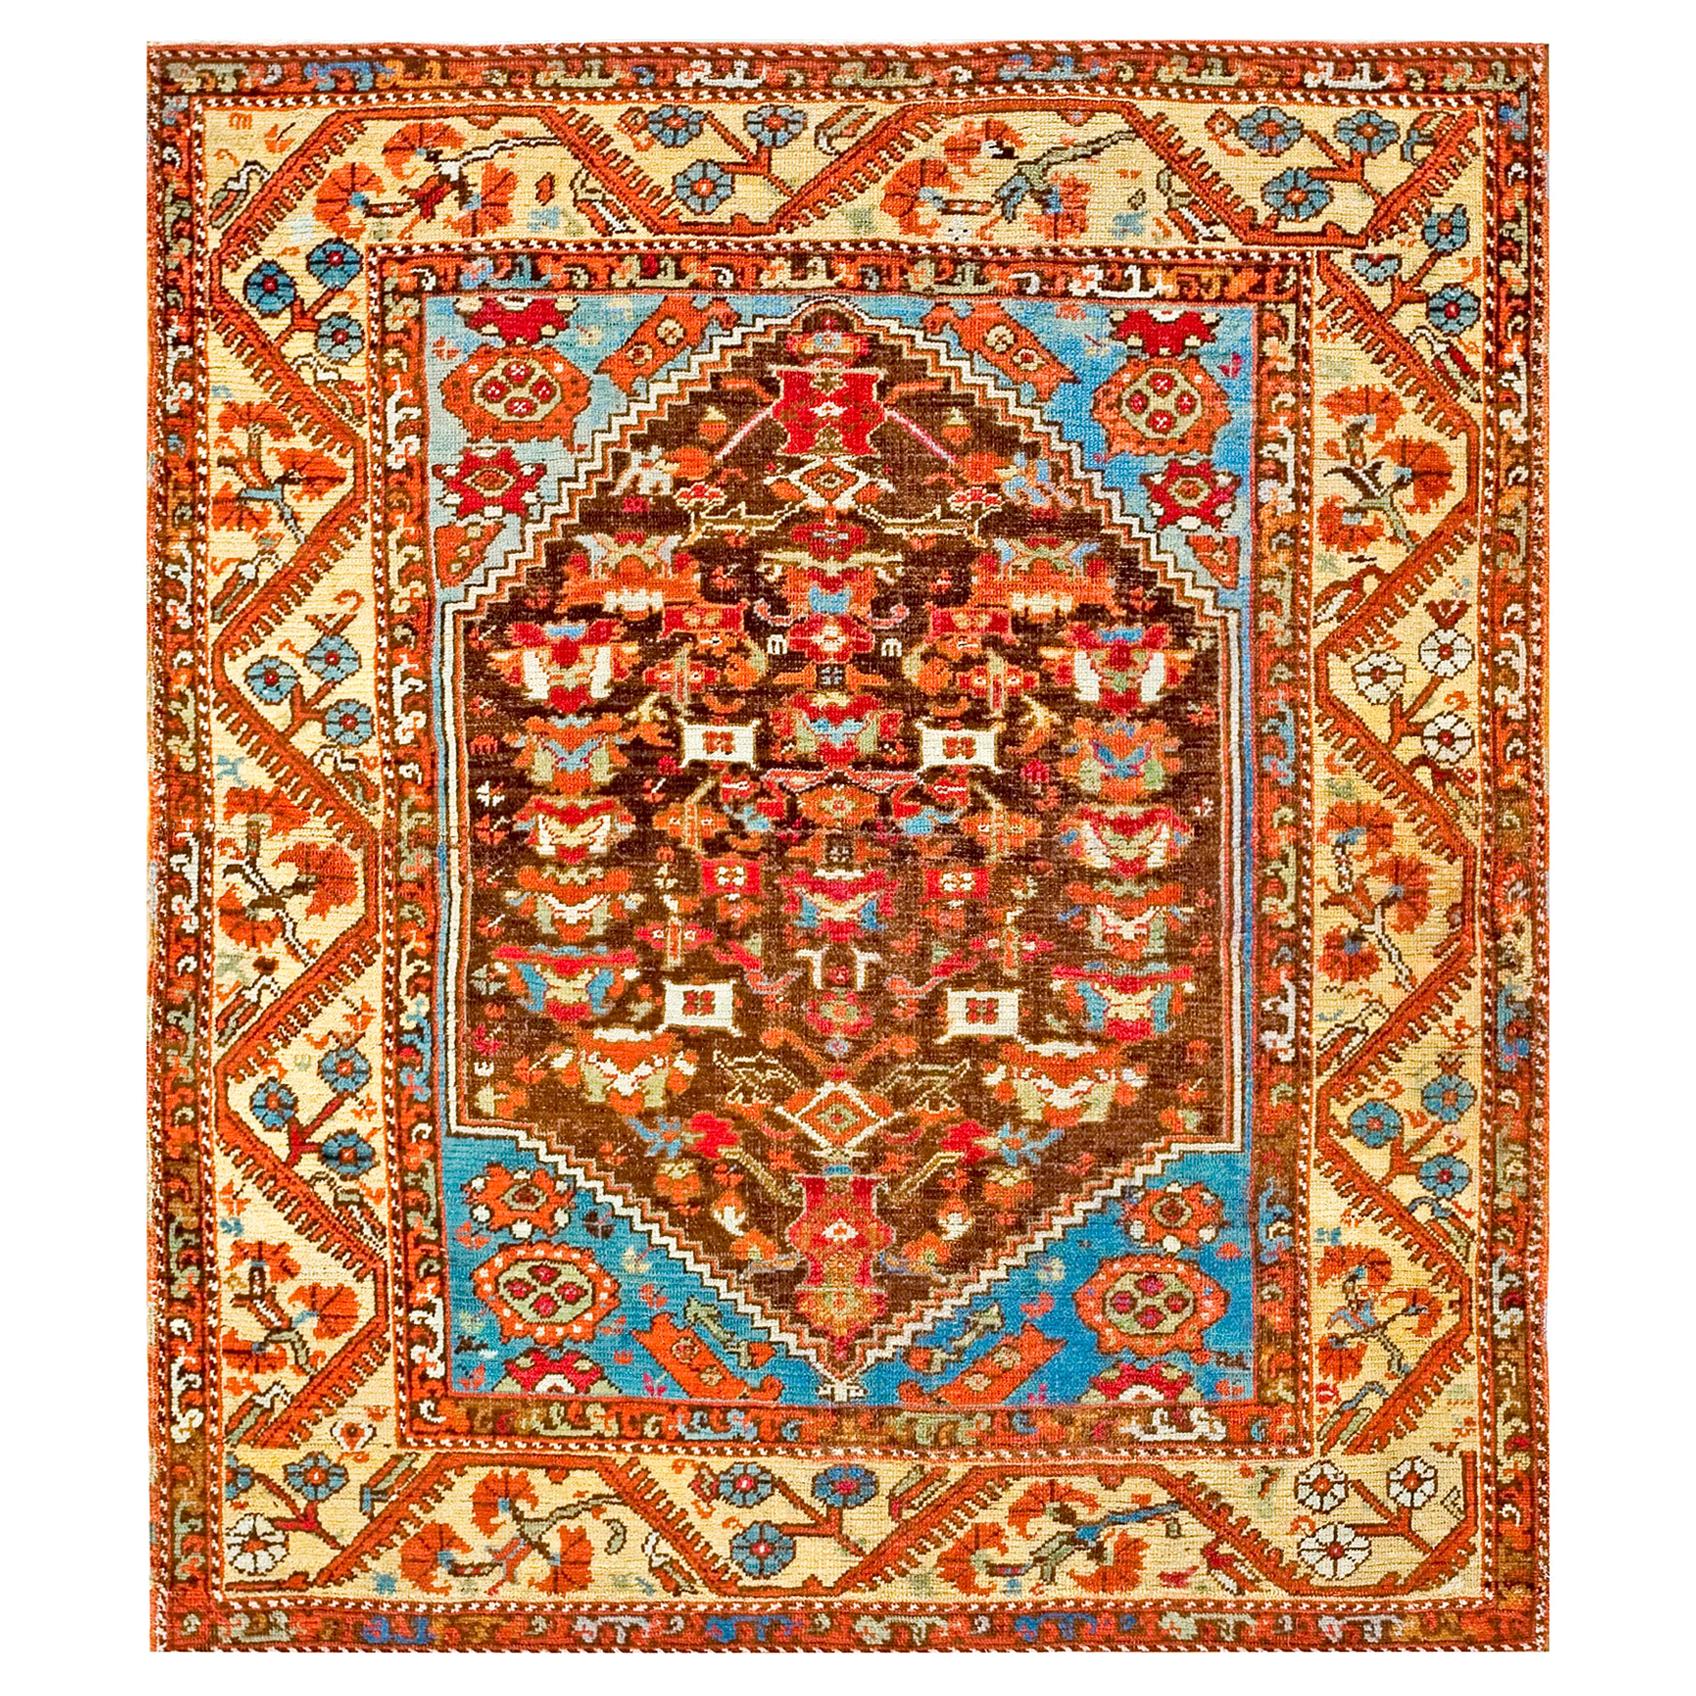 Early 19th Century Turkish Anatolian Kula Carpet ( 4'6" x 5'2" - 137 x 158 ) For Sale